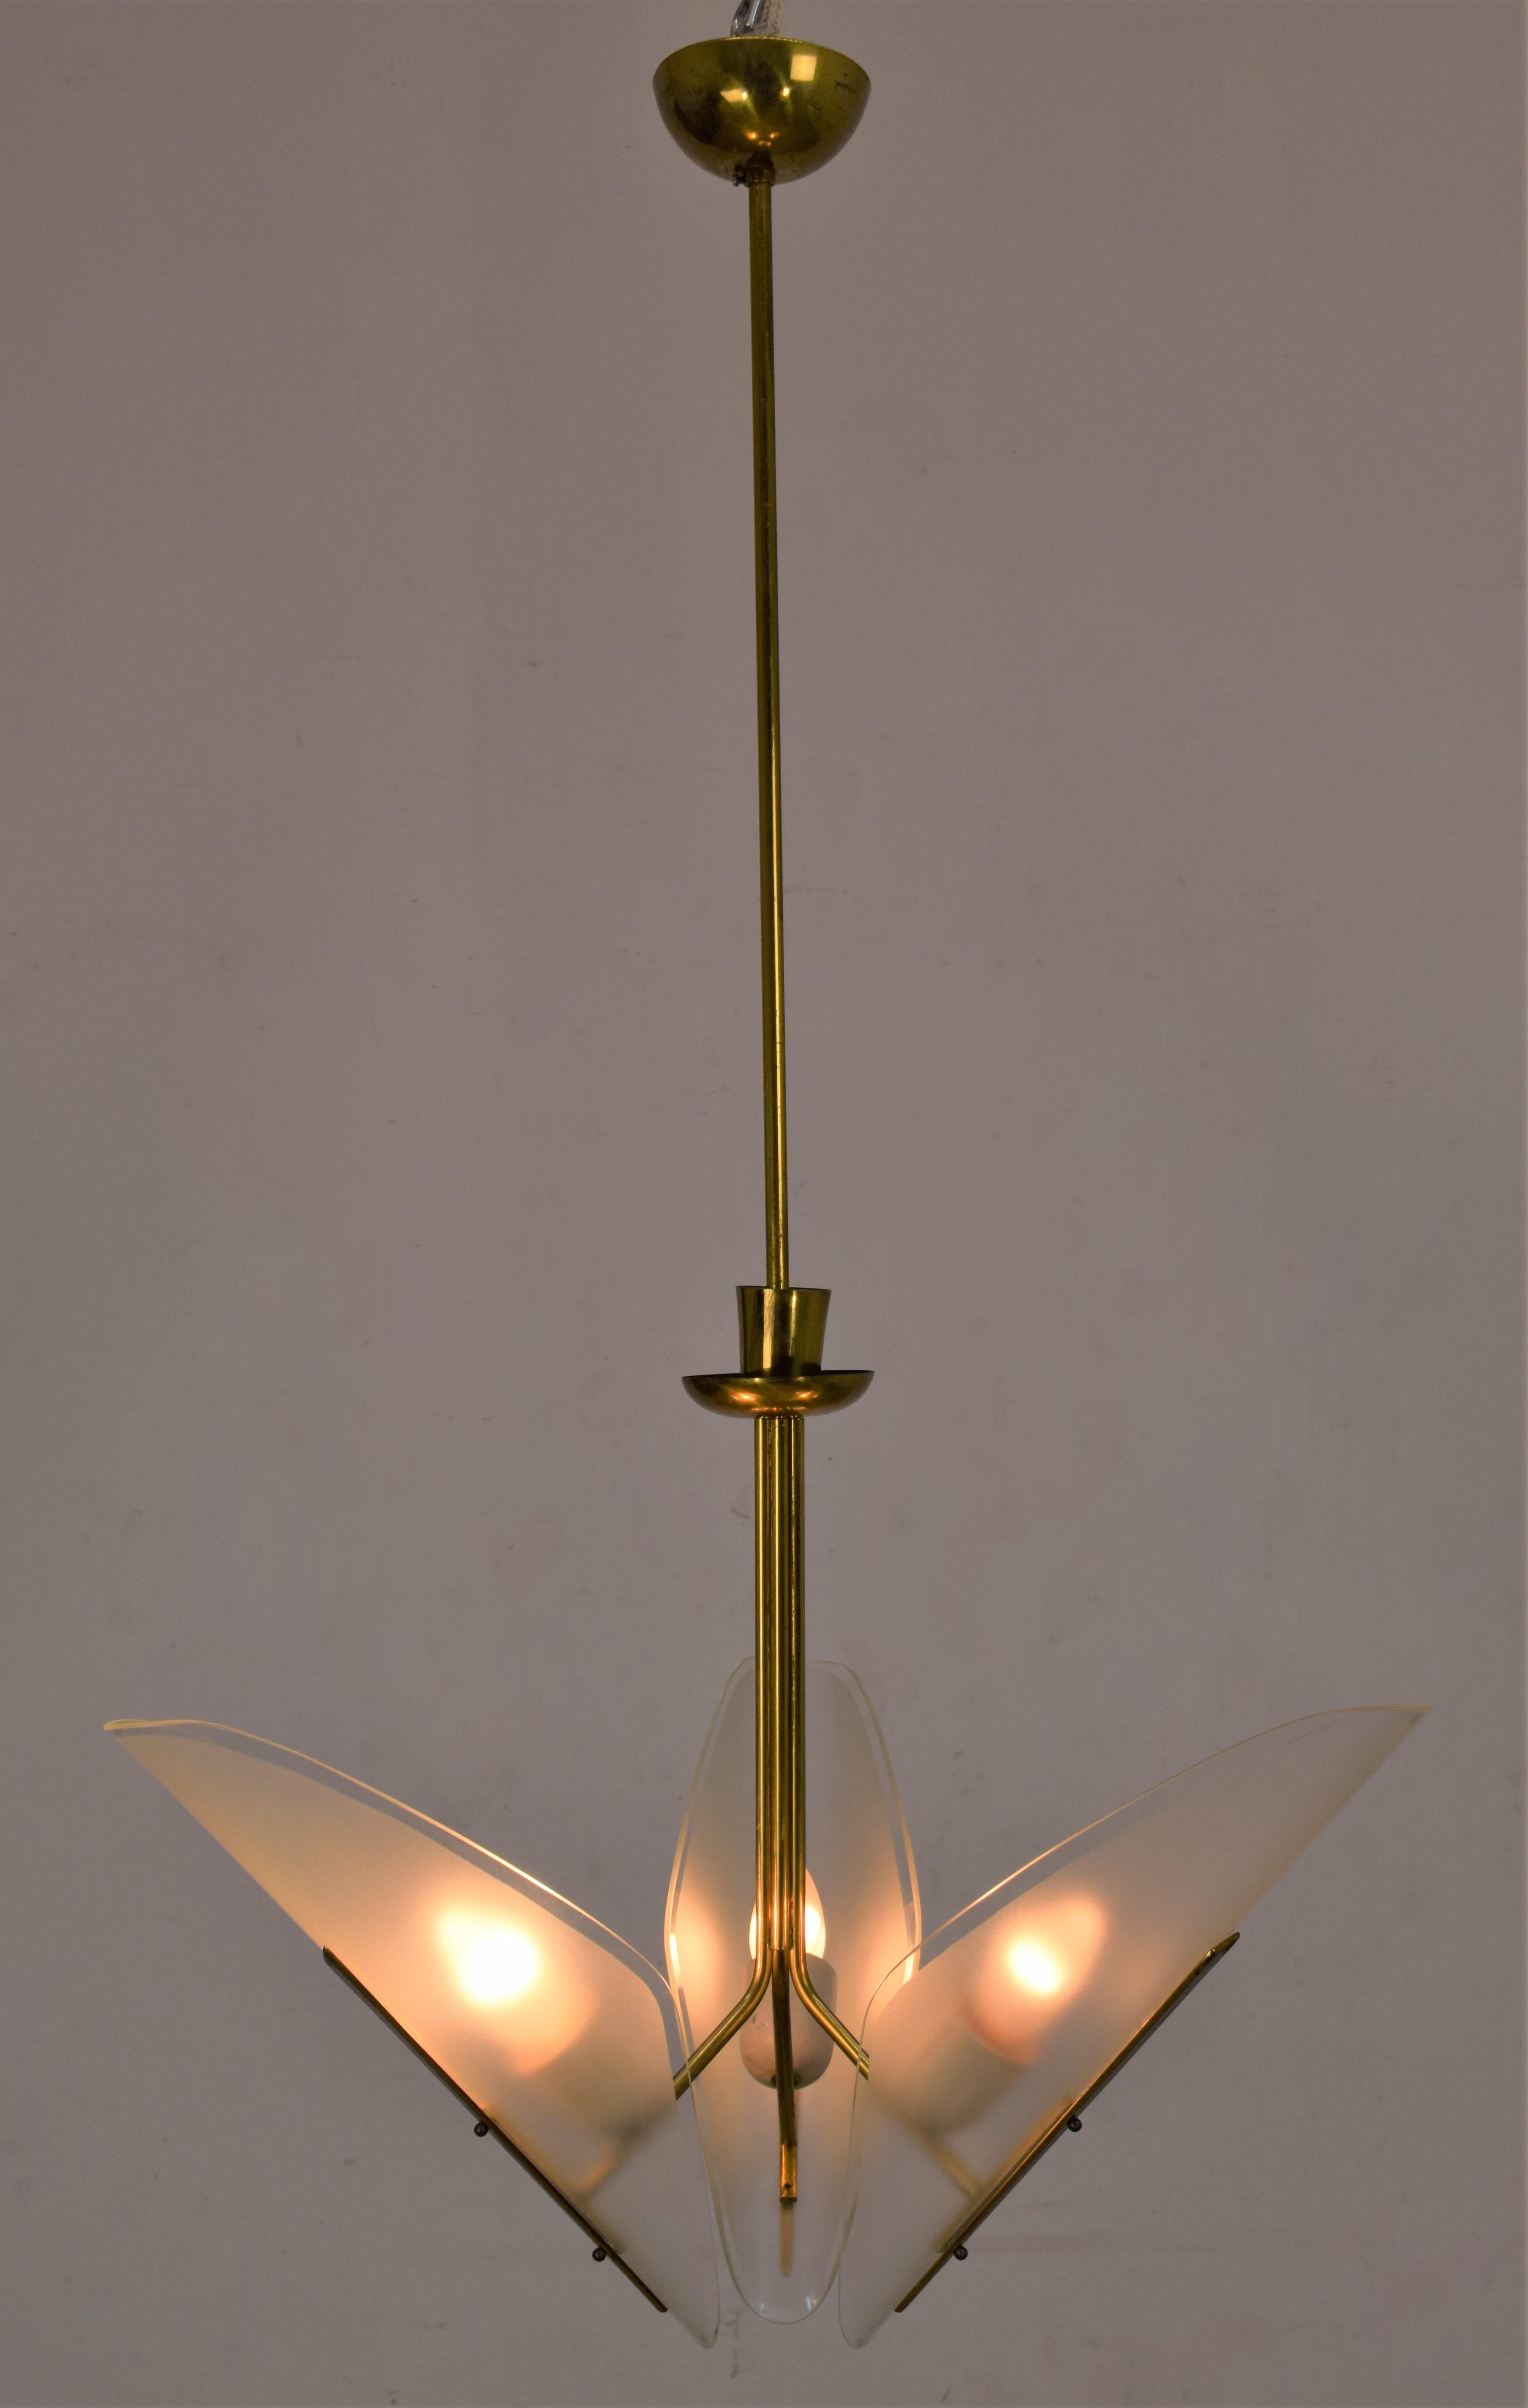 Brass and glass Italian chandelier, 1950s.
Dimensions: H= 100cm; D= 50; Glass 38,5x11,5x8 (cm).